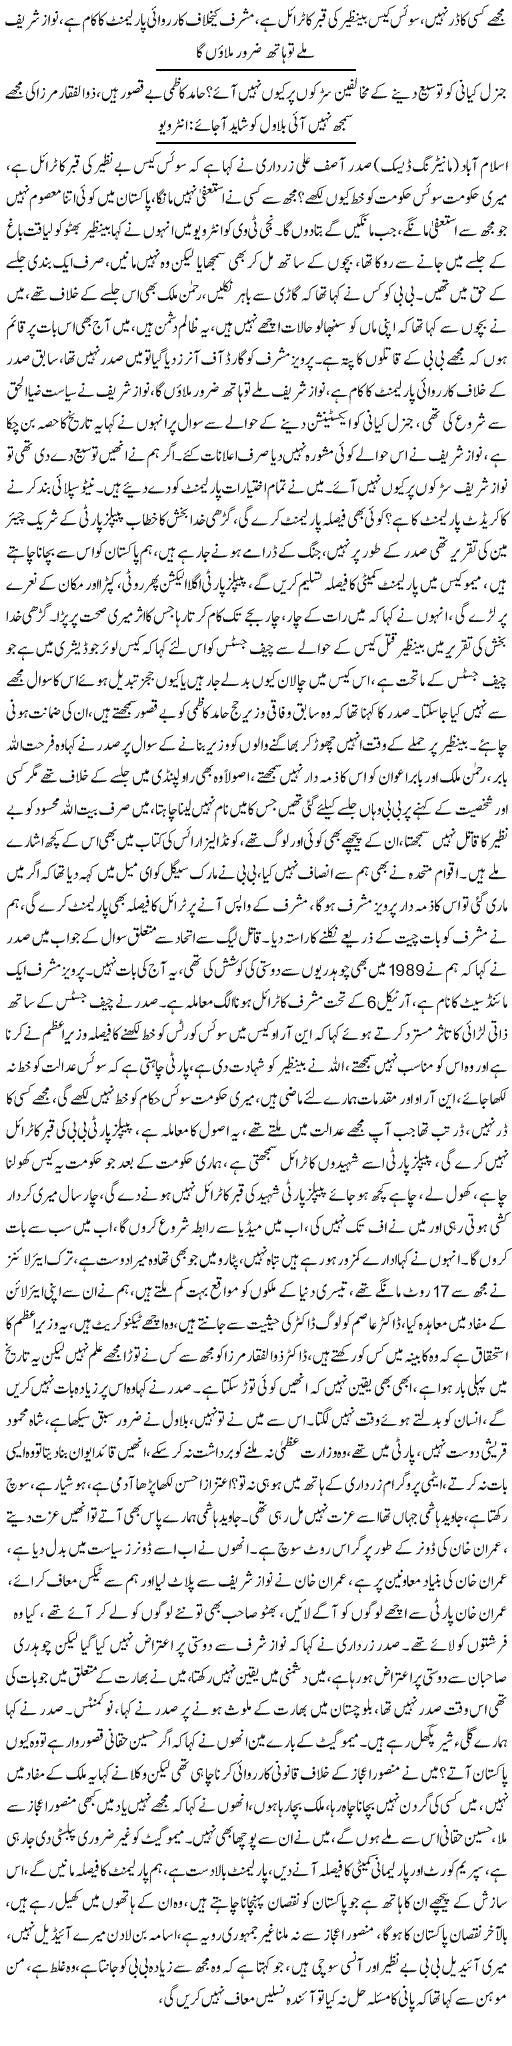 President Zardari Gives Interview To Hamid Mir - News in Urdu